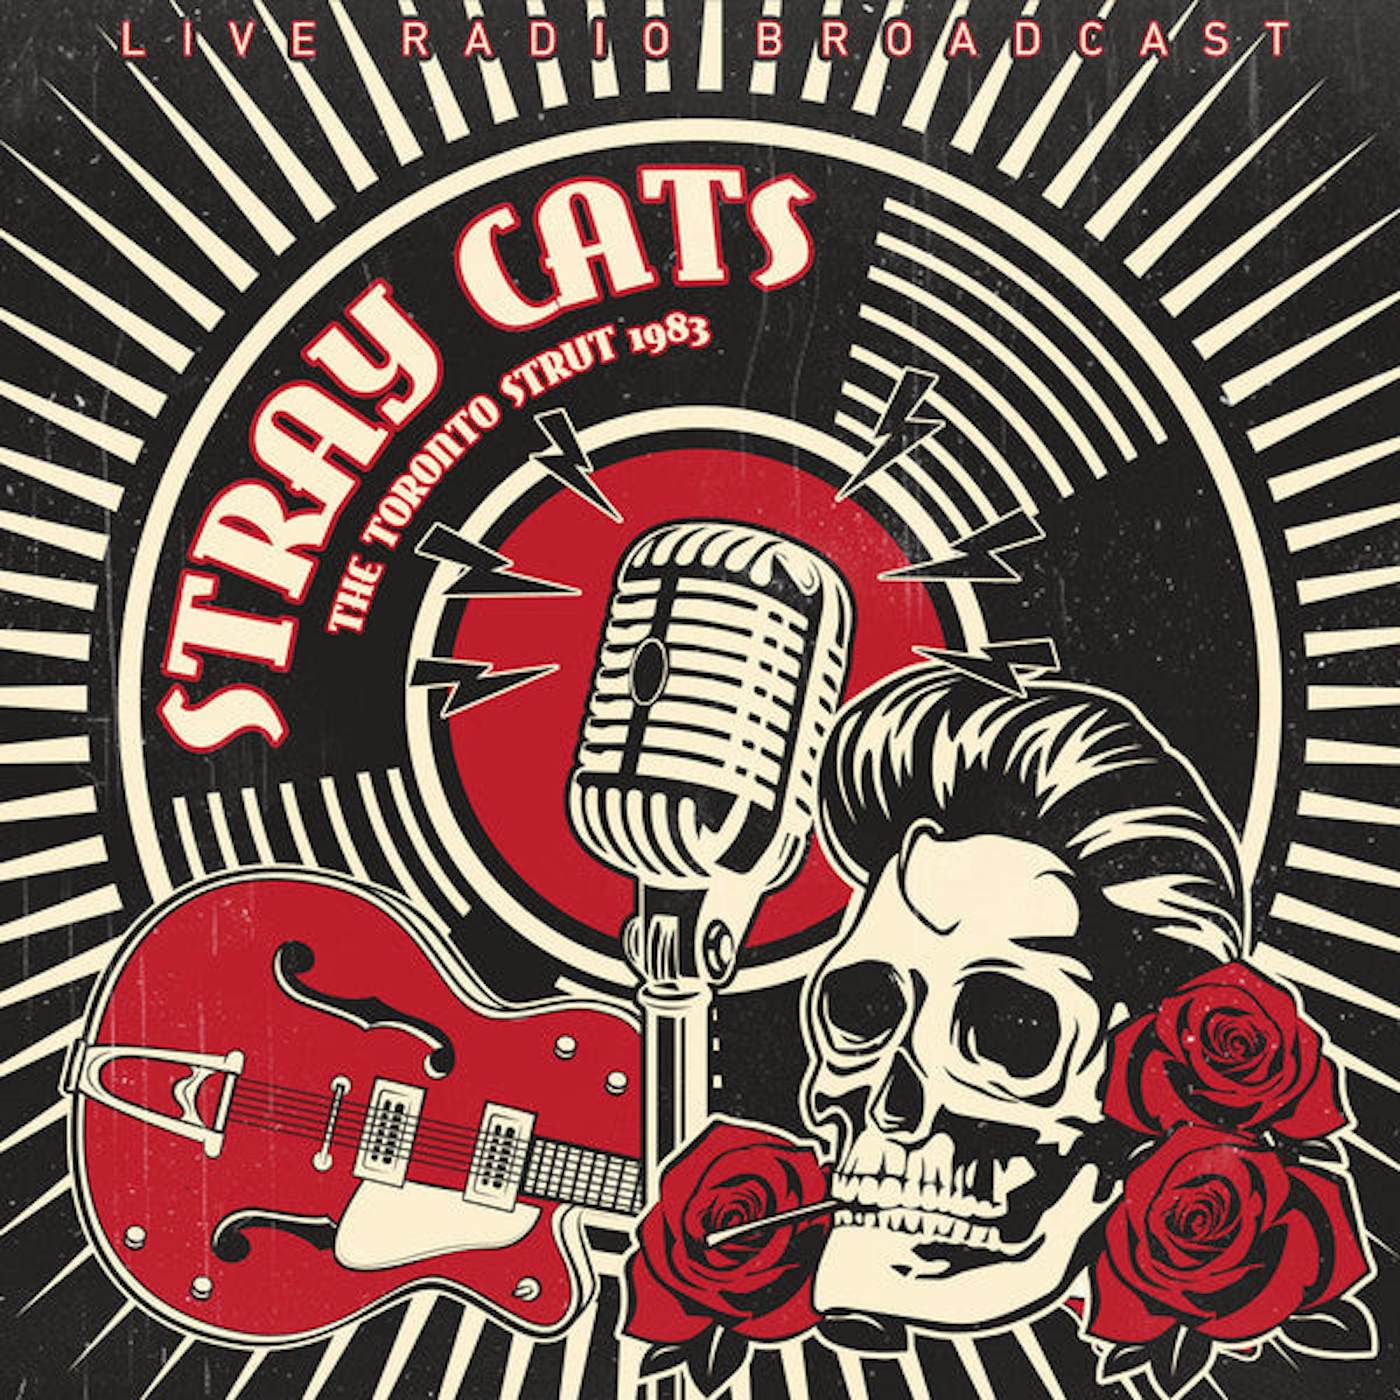 Stray Cats LP Vinyl Record - Best Of The Toronto Strut (Live) Broadcast Live From Massey Hall. Toronto. 19 83